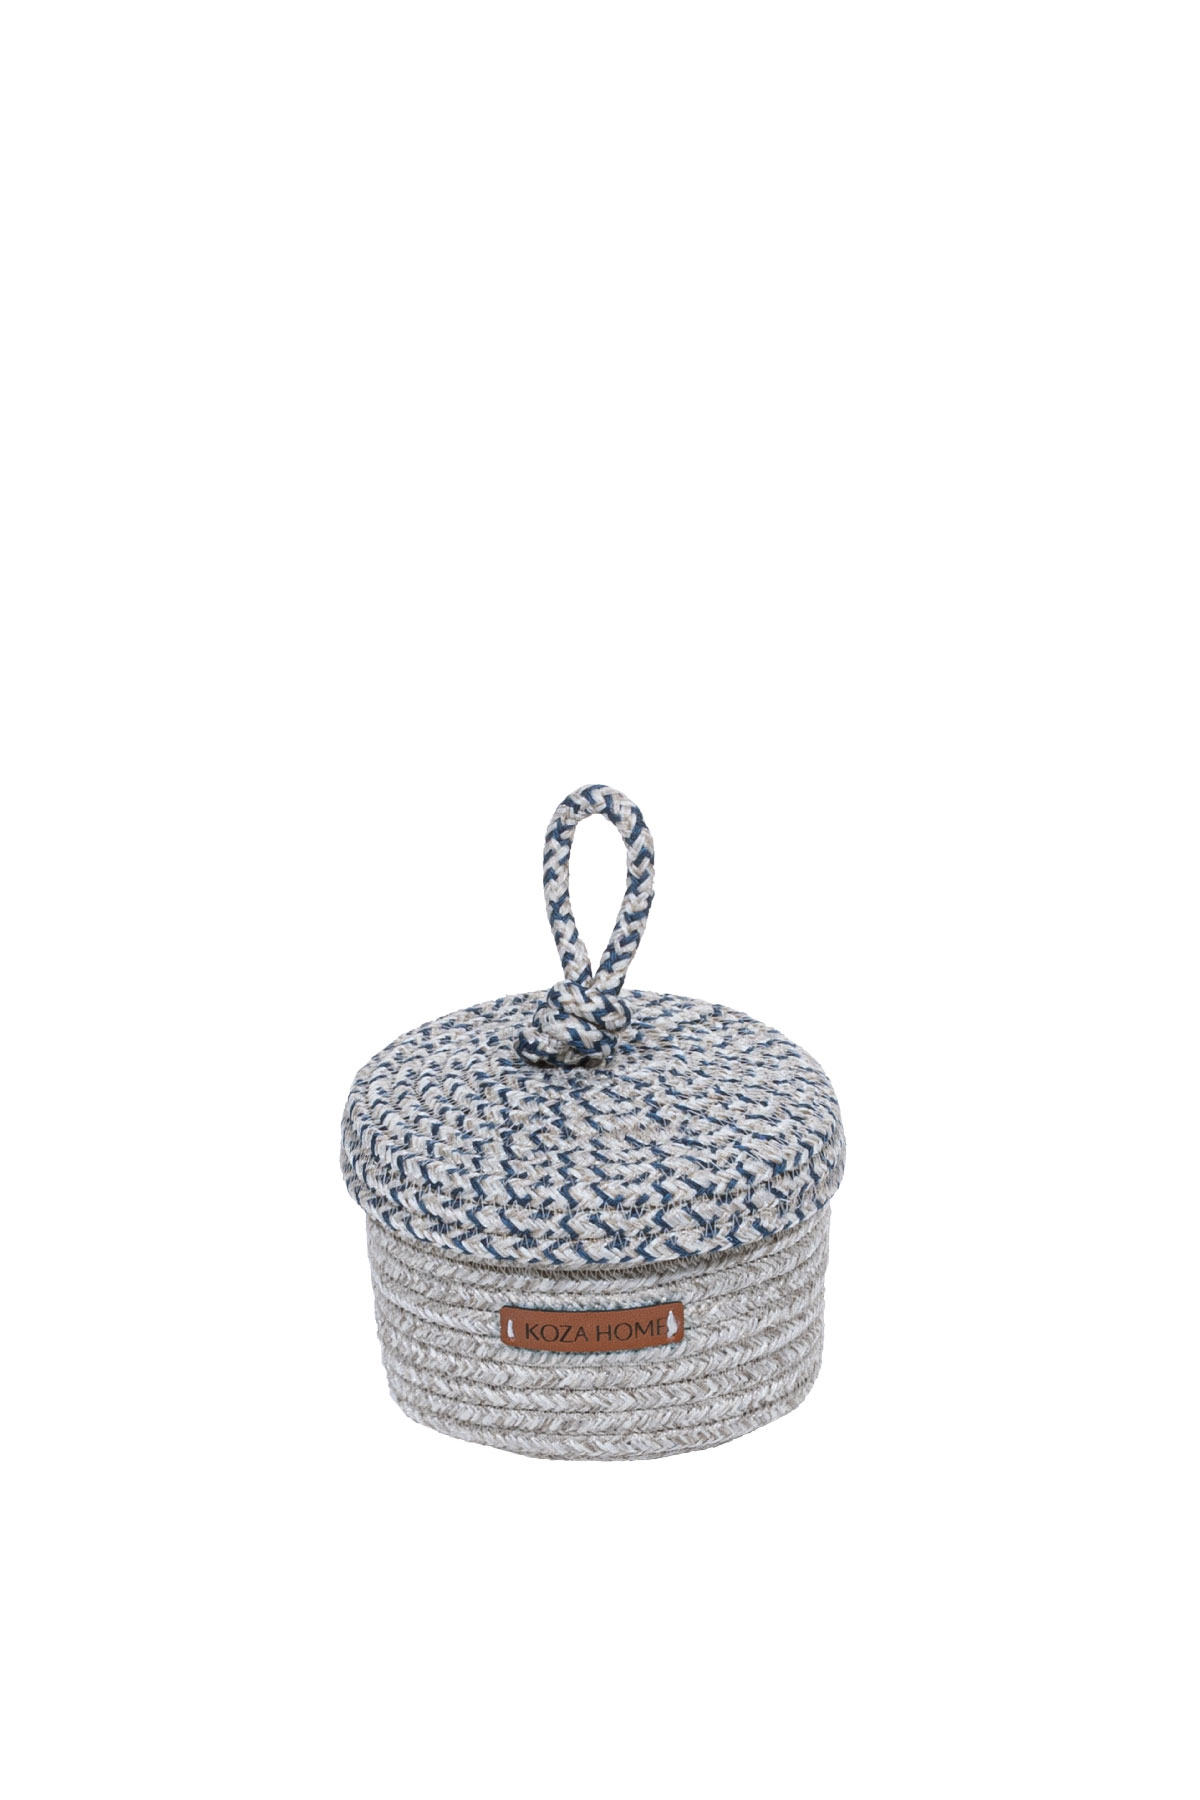 Cesta Handmade Cotton Gray Navy Blue Wicker Decorative Basket With Lid 15cm